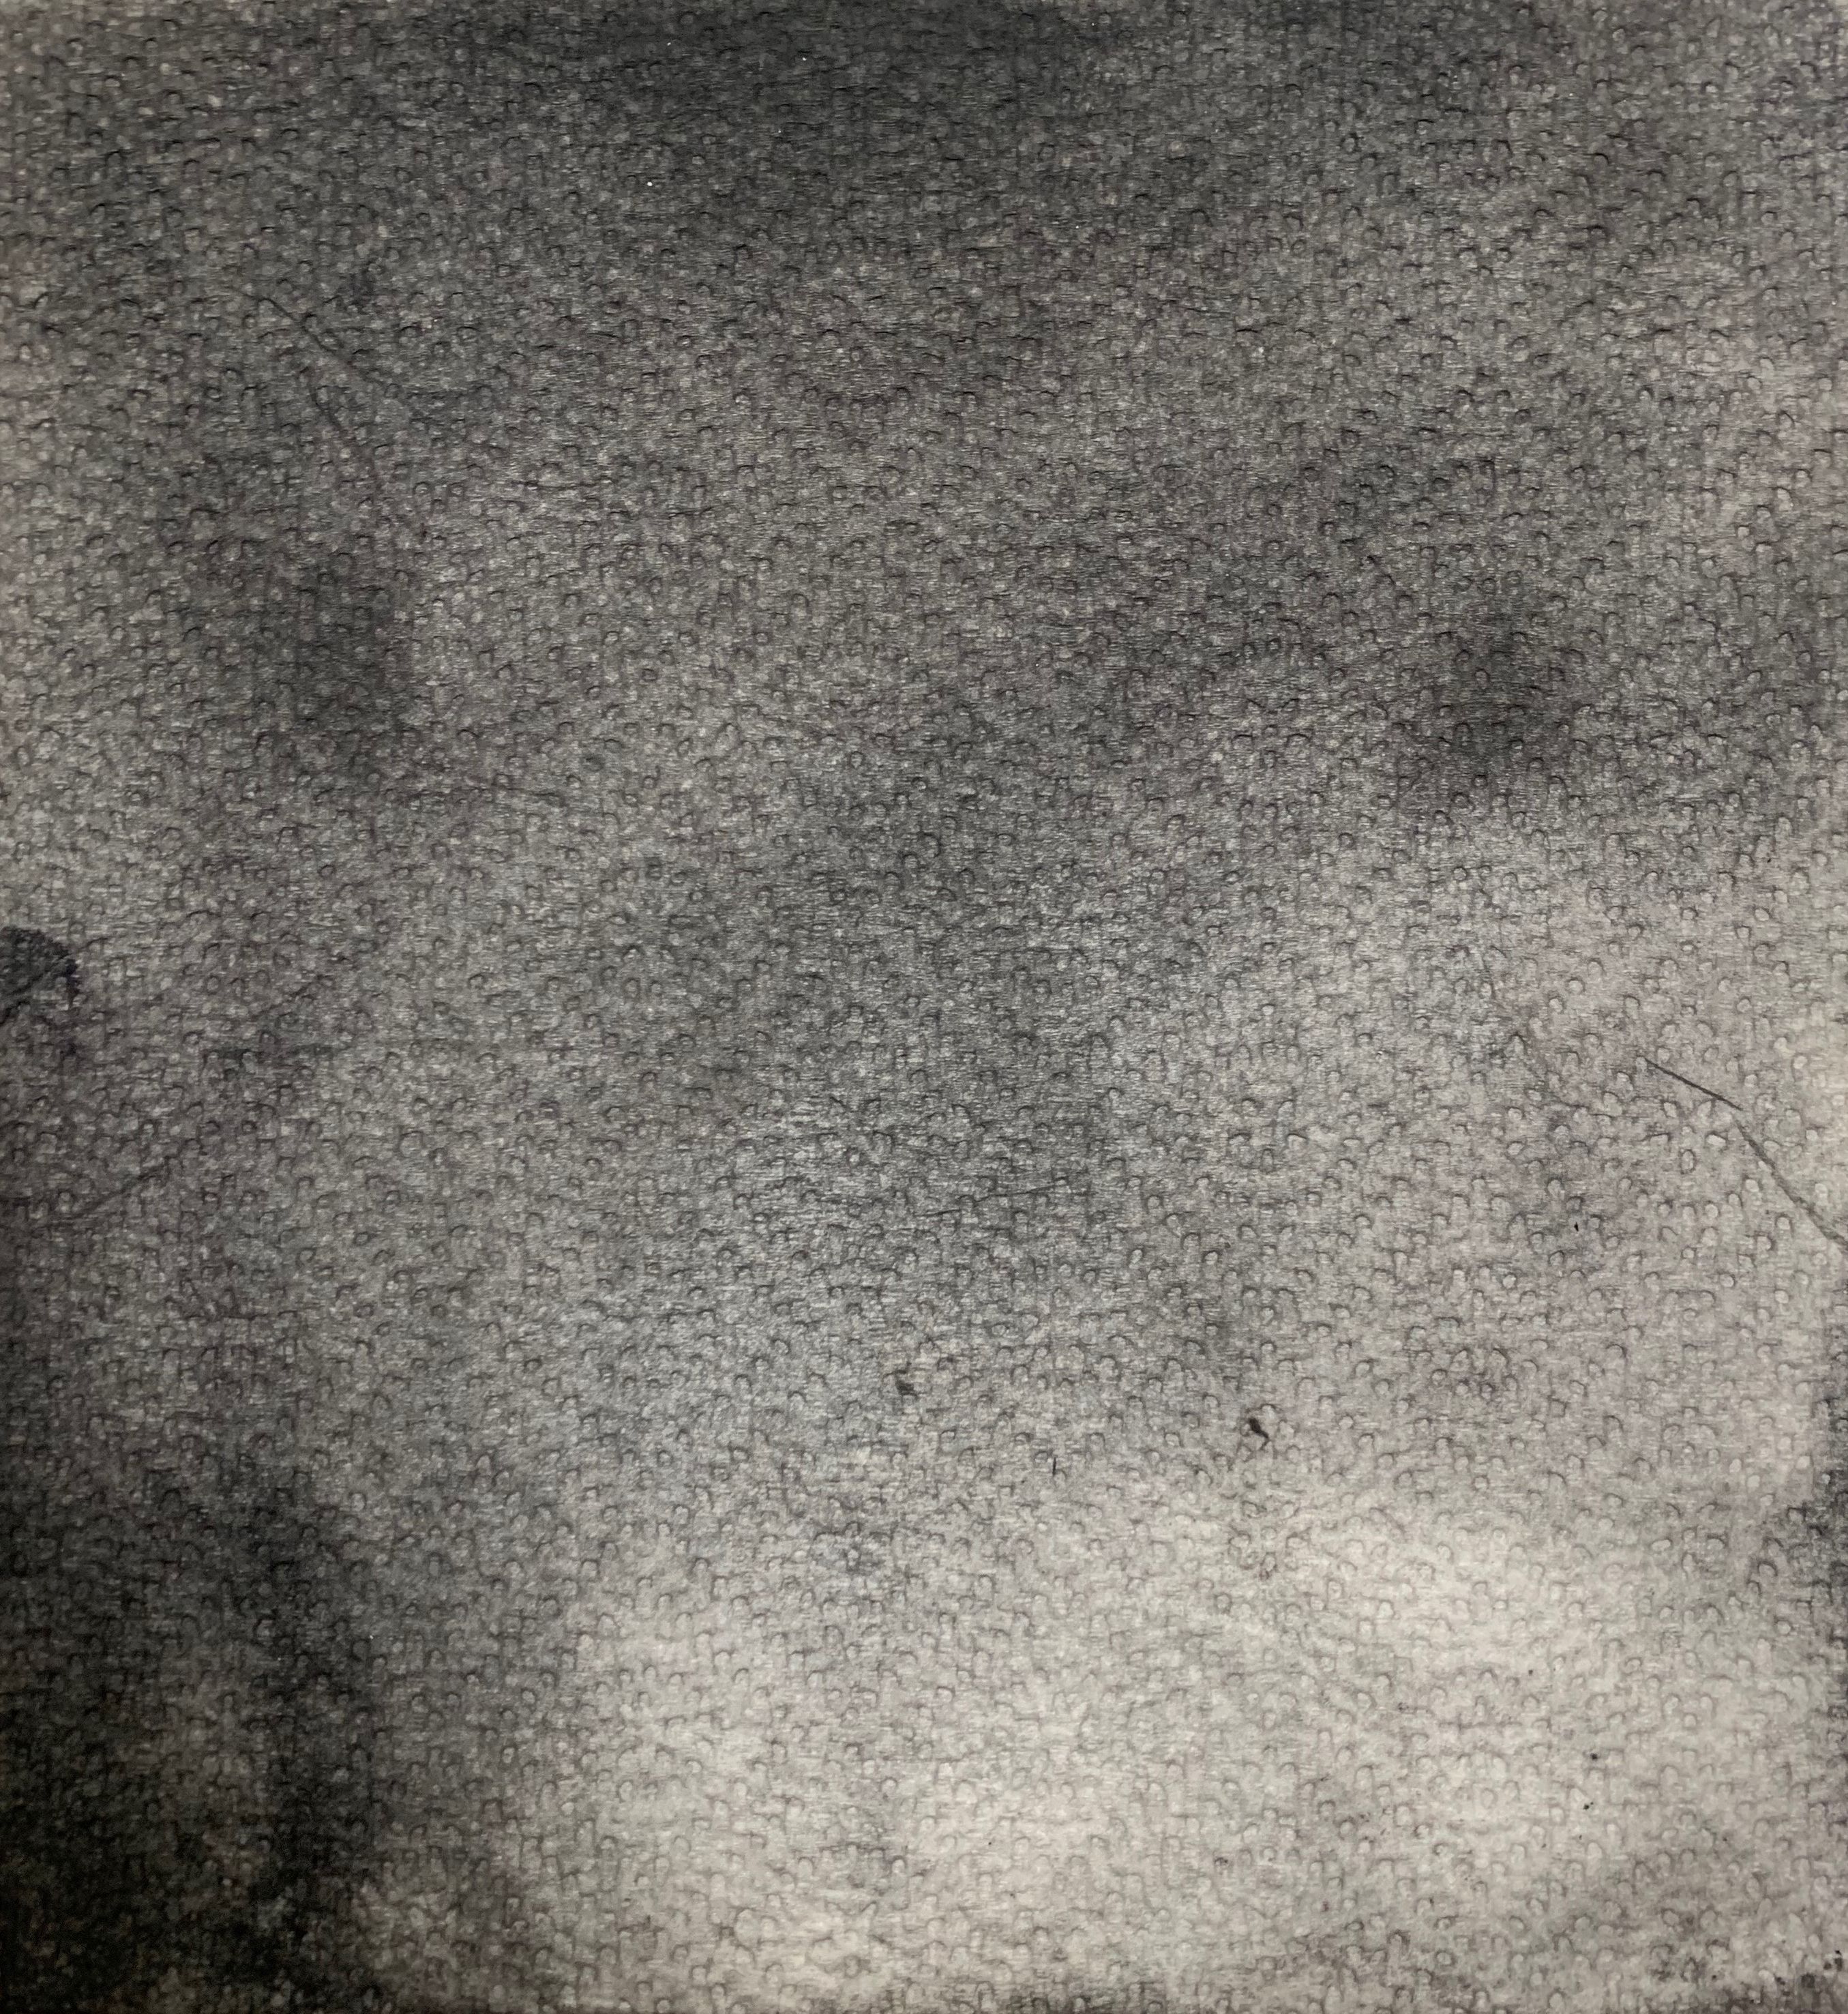 Rafal Bujnowski, Dirty Towel, 2019, oil on paper, 9 1/2 x 8 3/4 in. (24.13 x 22.23 cm), RB_FP4171 